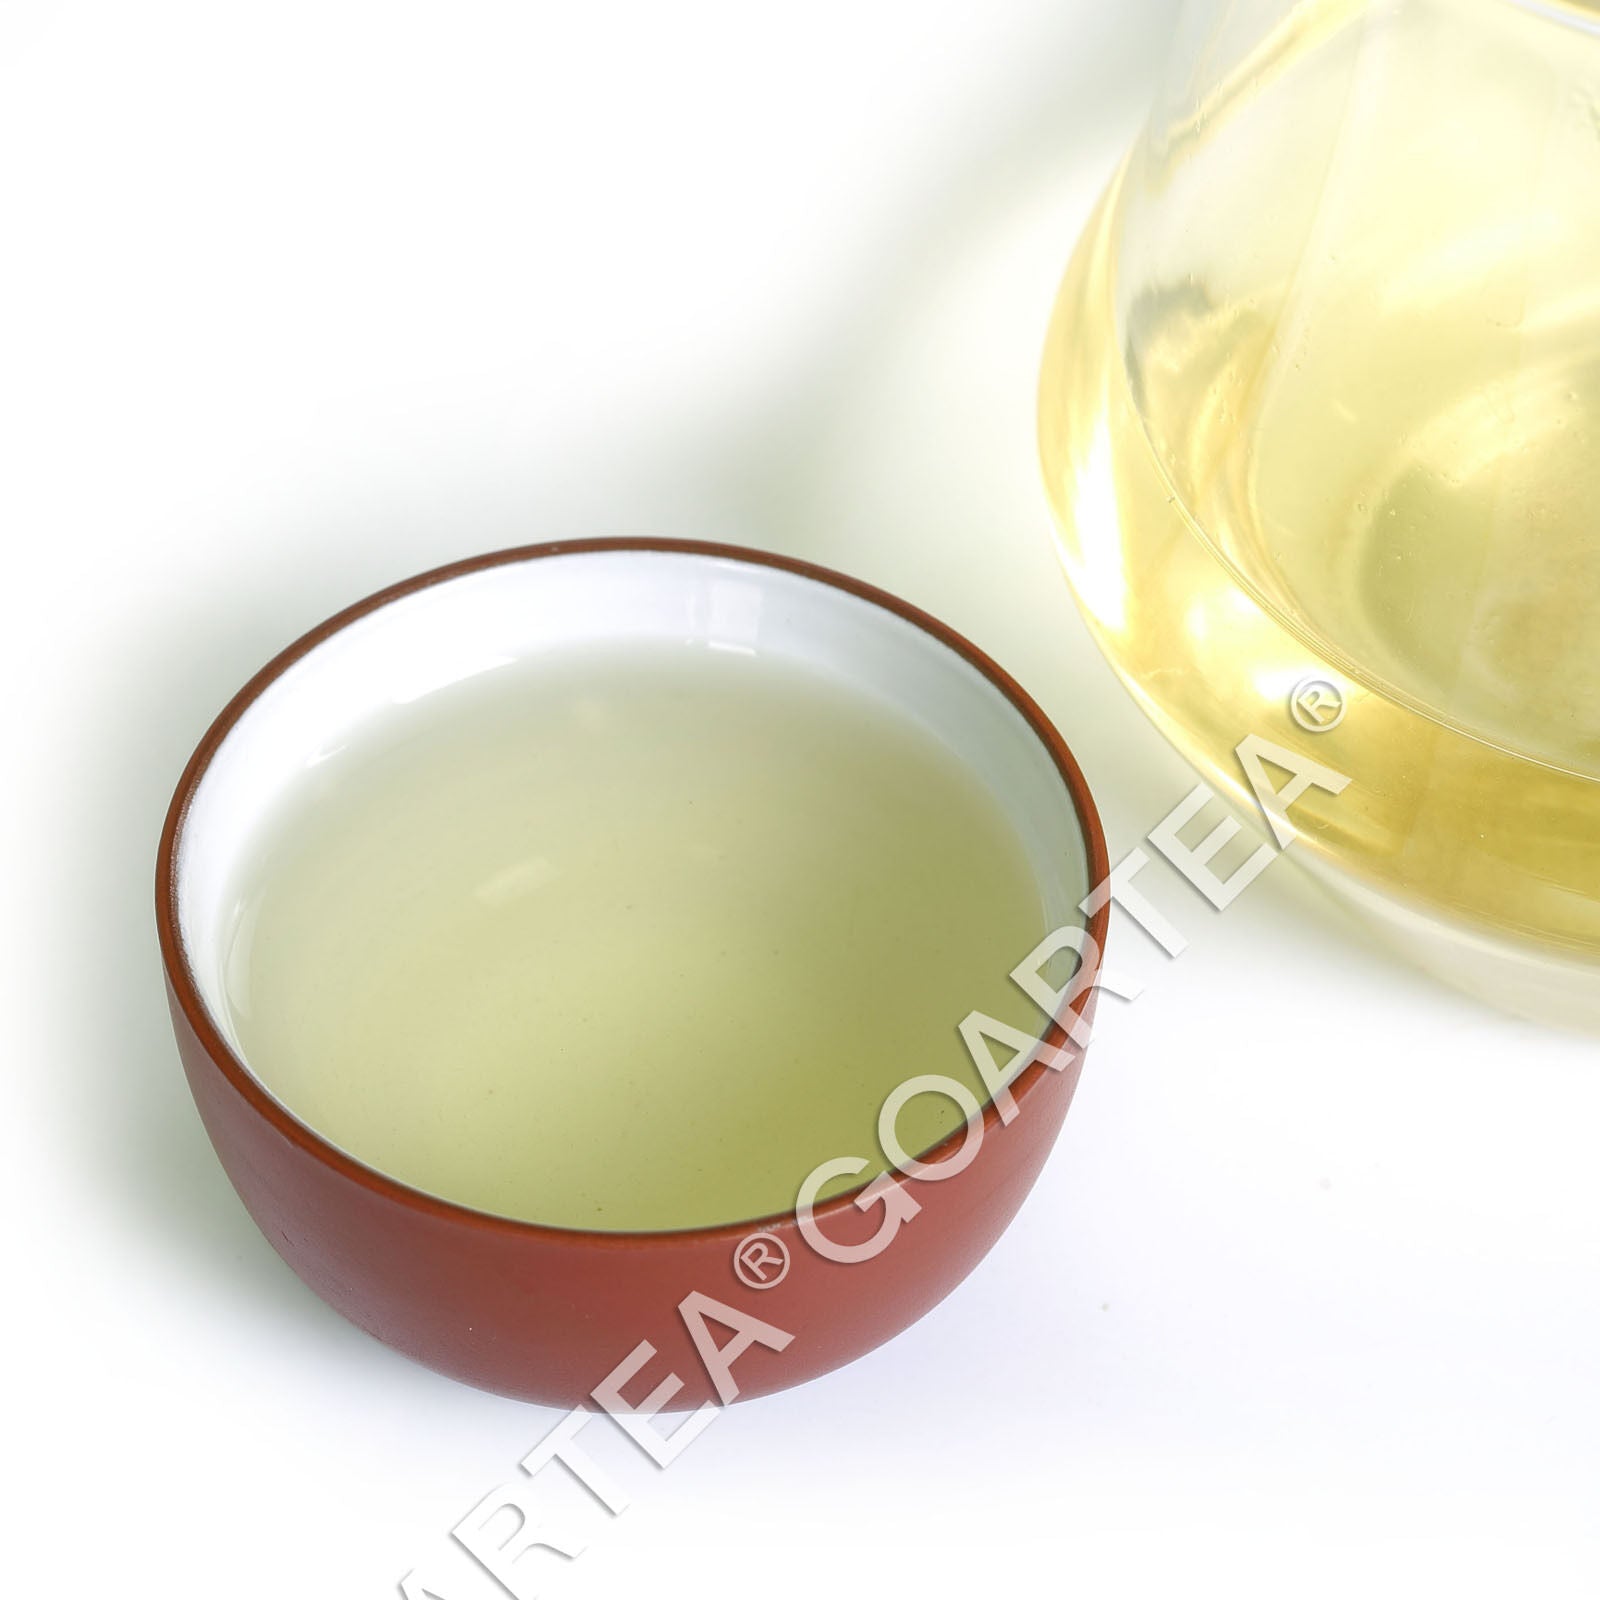 HelloYoung HELLOYOUNG 250g Premium Suzhou Biluochun Green Tea Spring Pi lo Chun Snail Shape